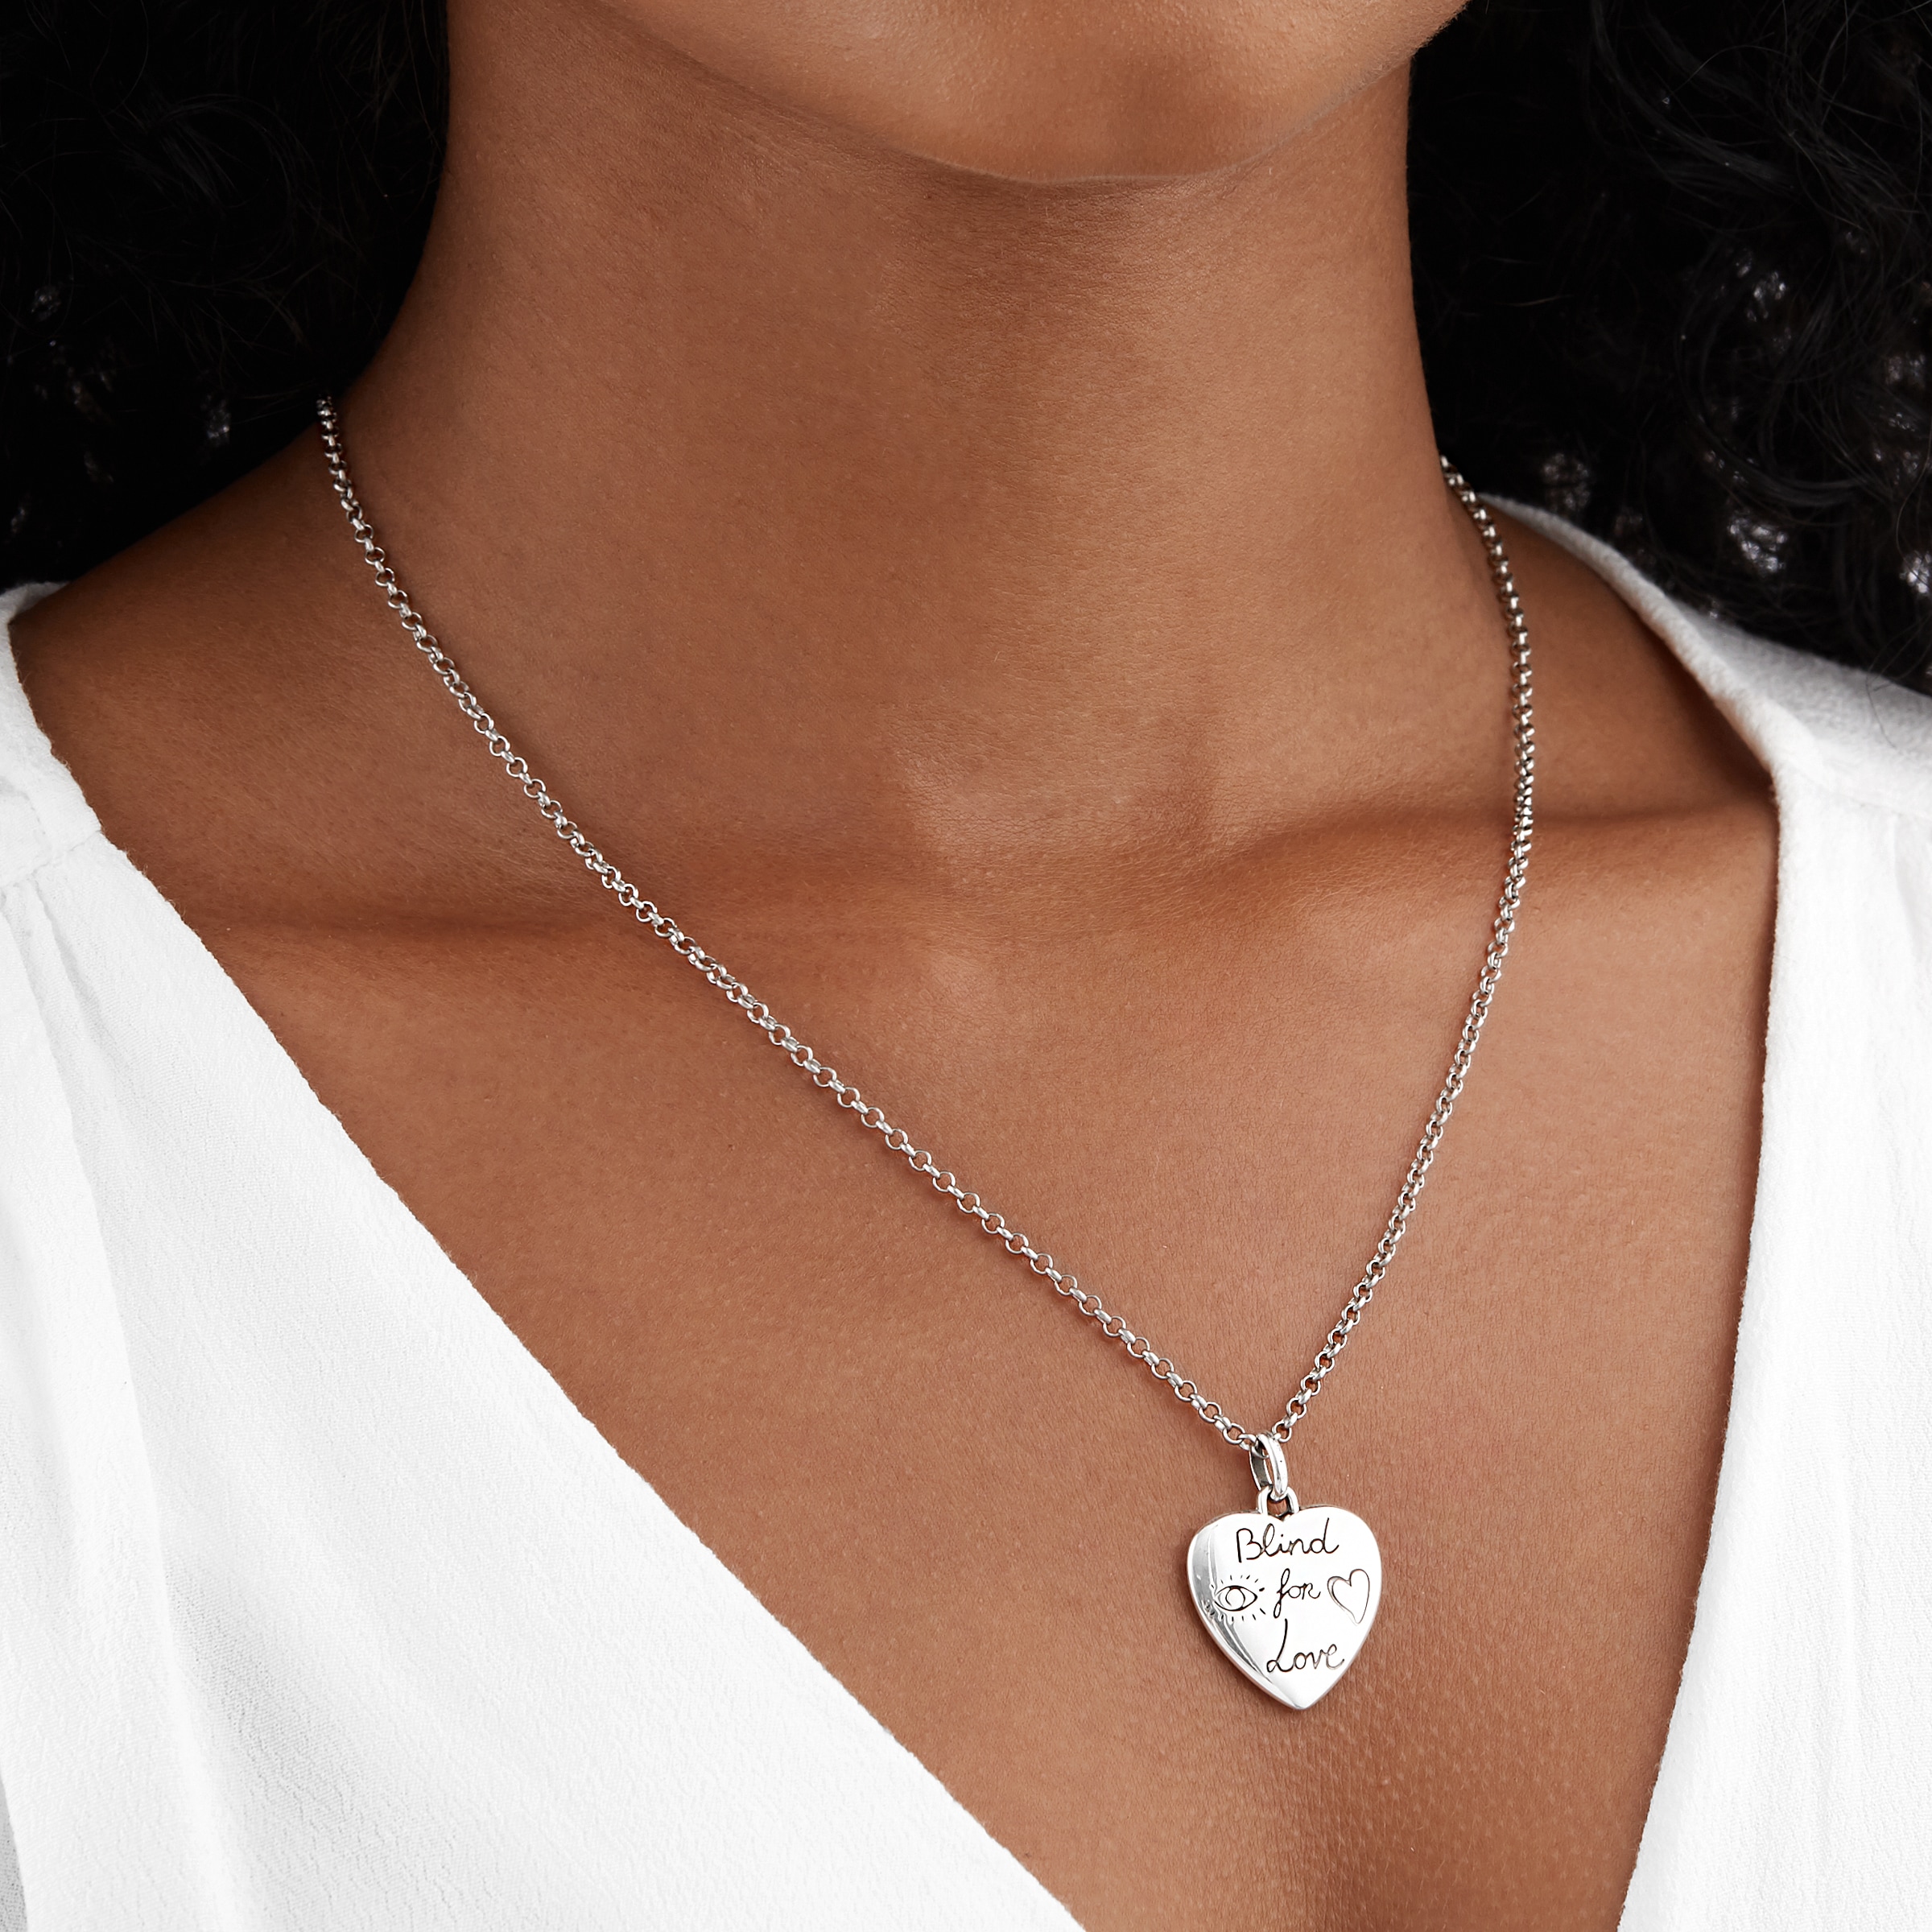 NIB - GUCCI Blind For Love Sterling Silver Tiger Pendant Necklace | eBay